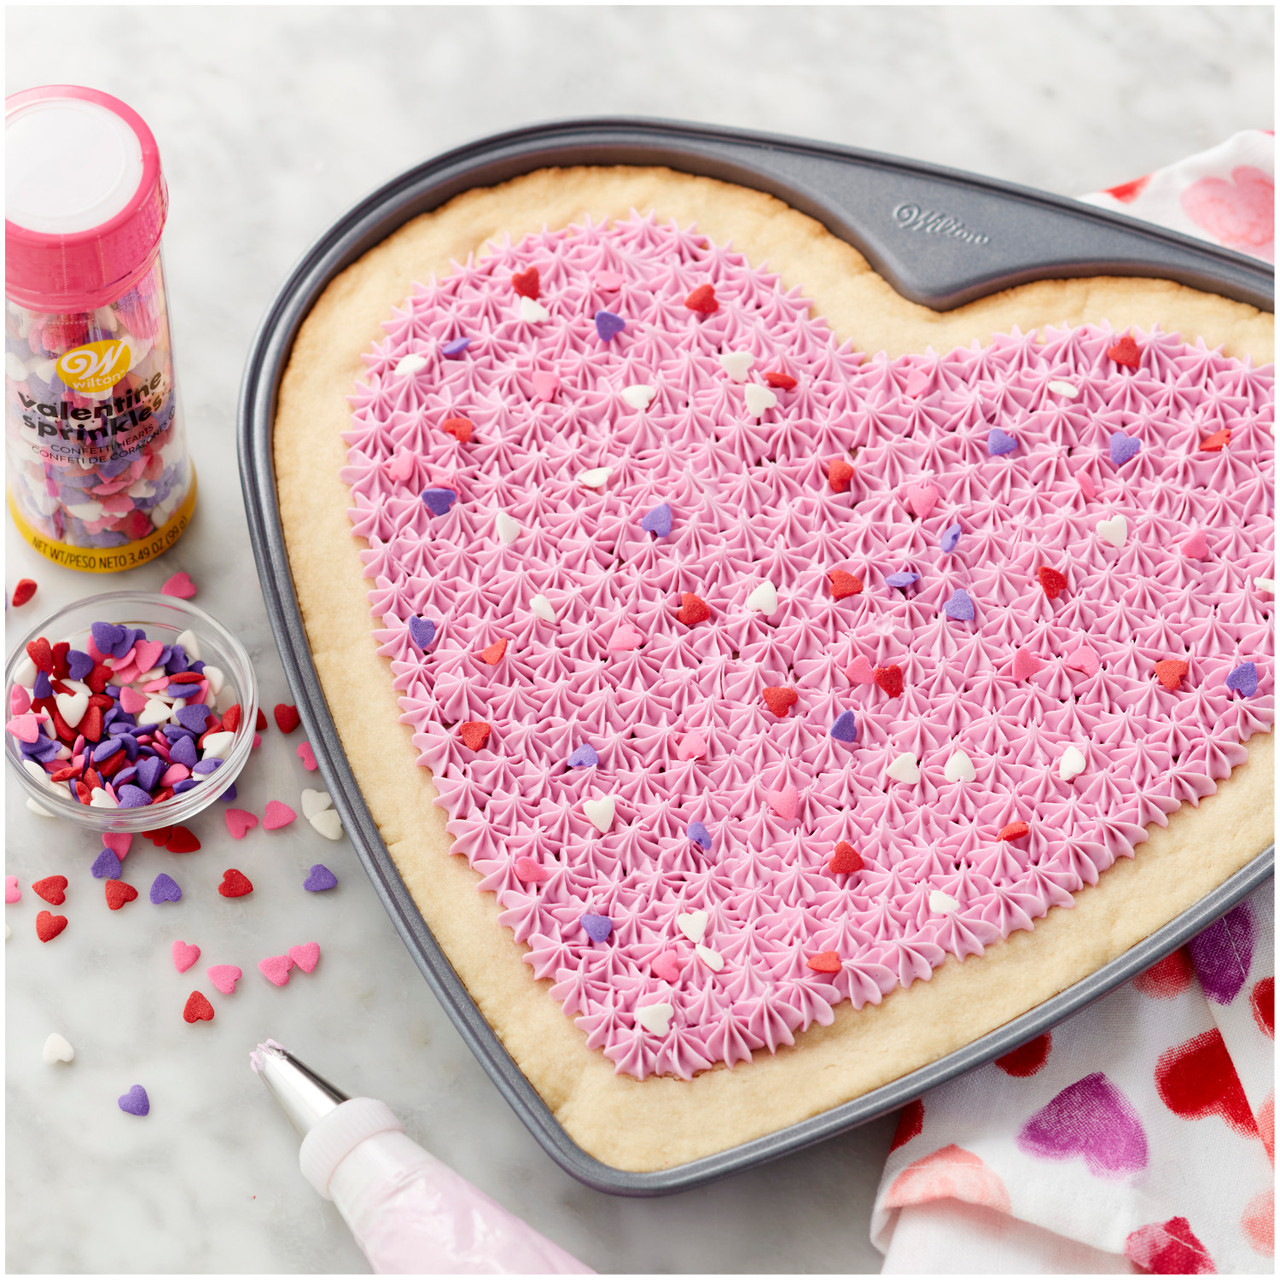 Wilton Valentine's Day Non-Stick Heart Shaped Mini Cake Pan, 6 cavity 